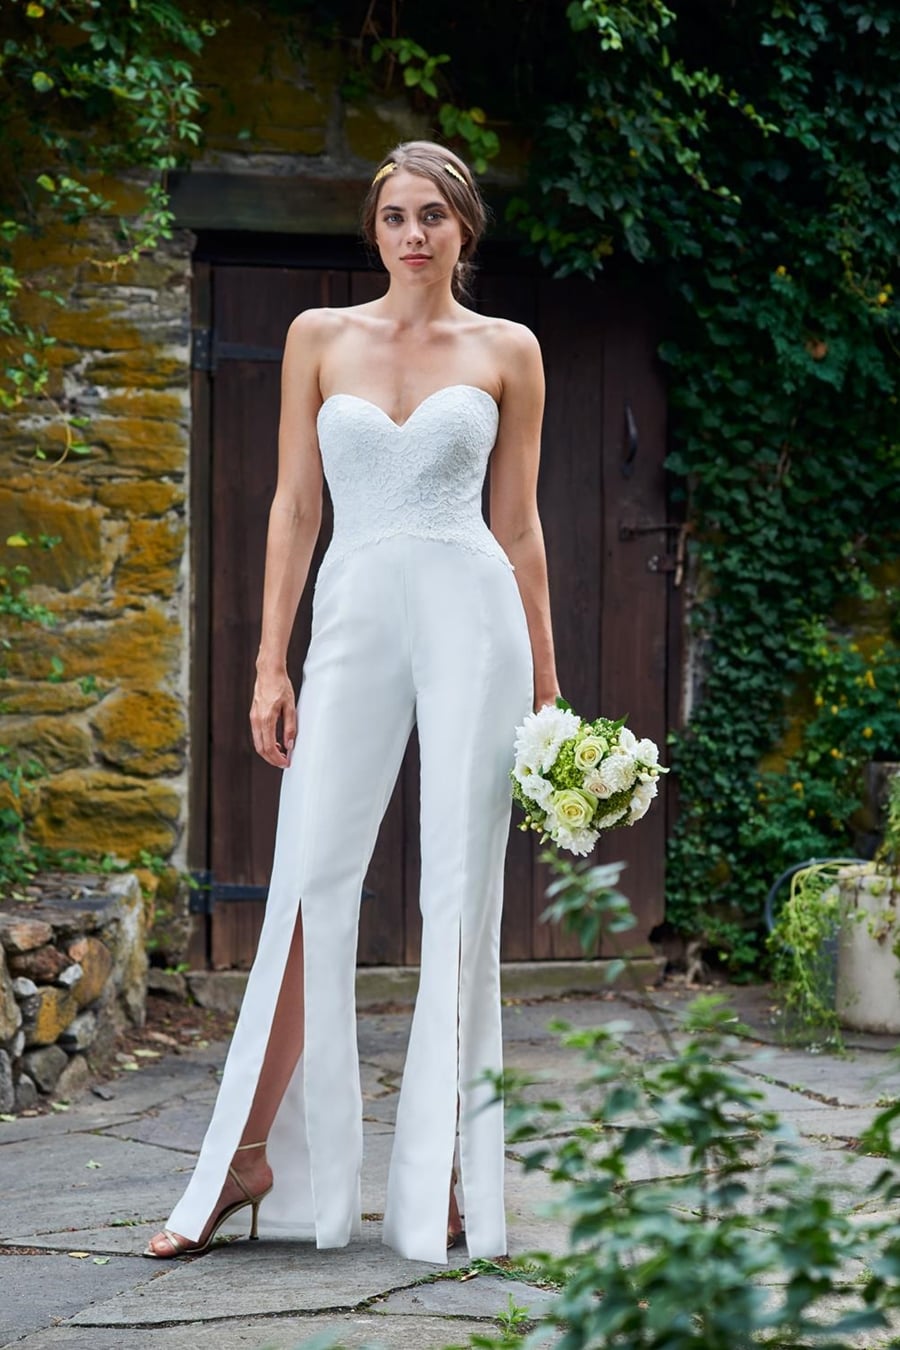 Brides | Longing For a Wedding Dress ...